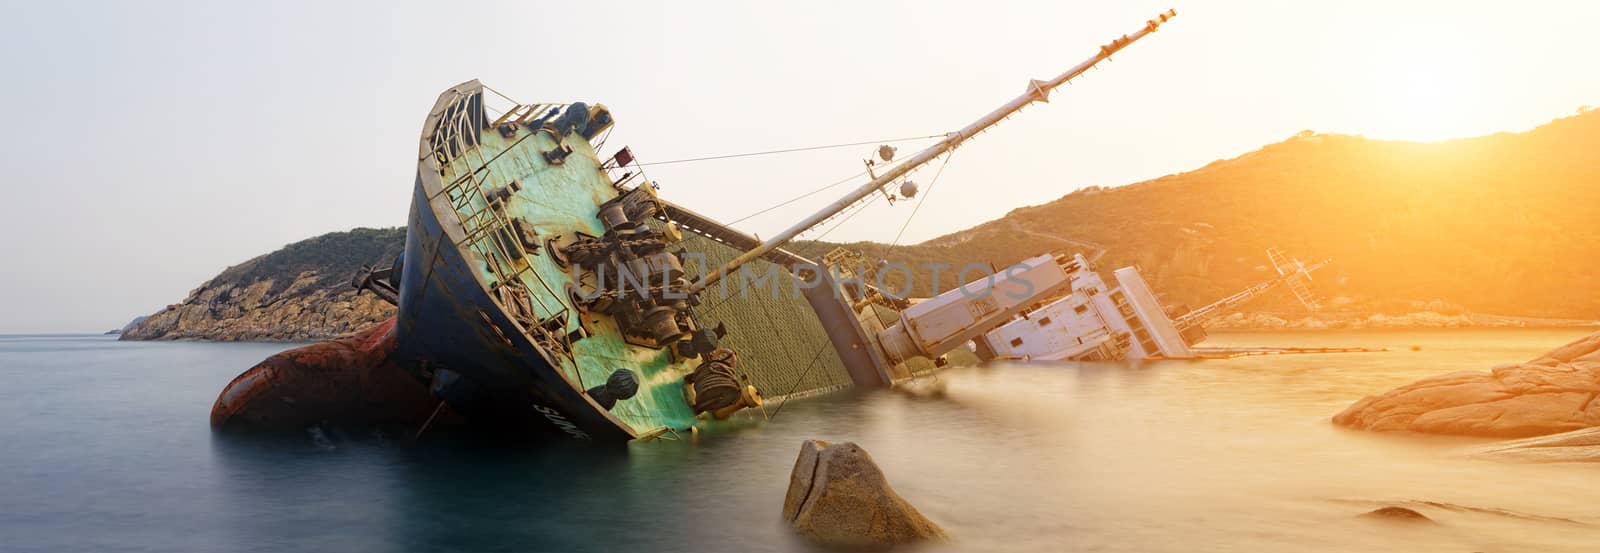 shipwreck , cargo ship  by cozyta